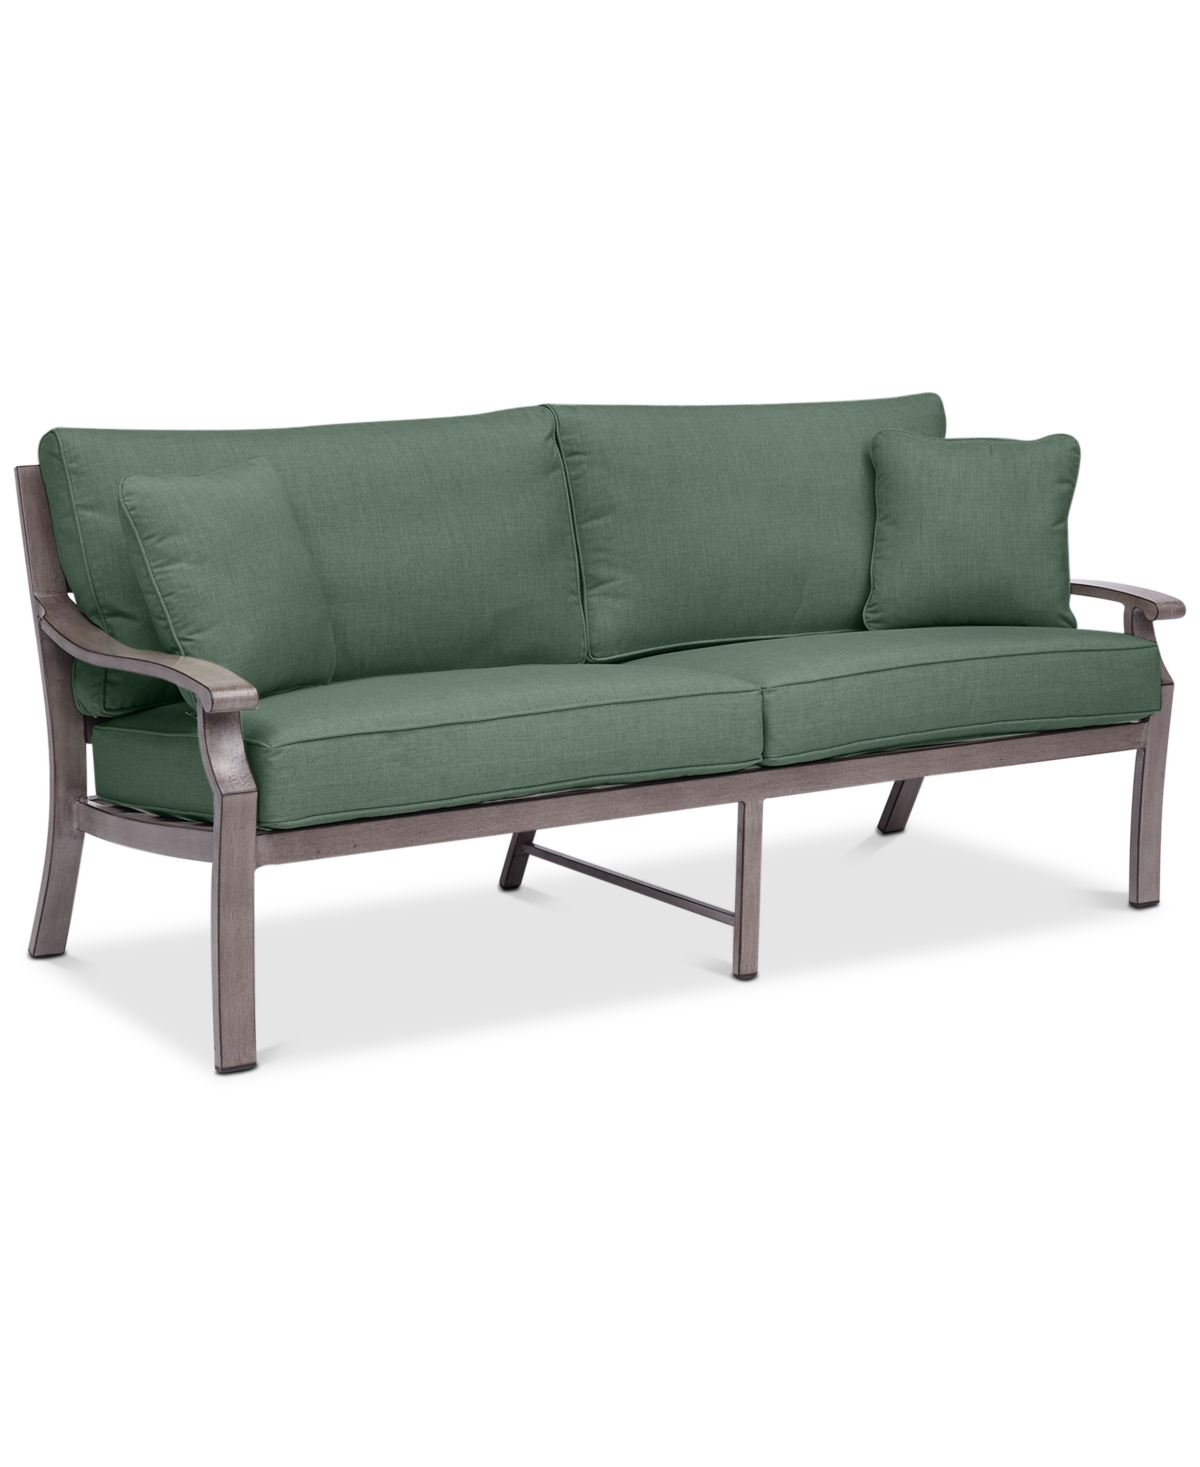 Agio Tara Aluminum Outdoor Sofa, Created For Macy's In Outdura Grasshopper